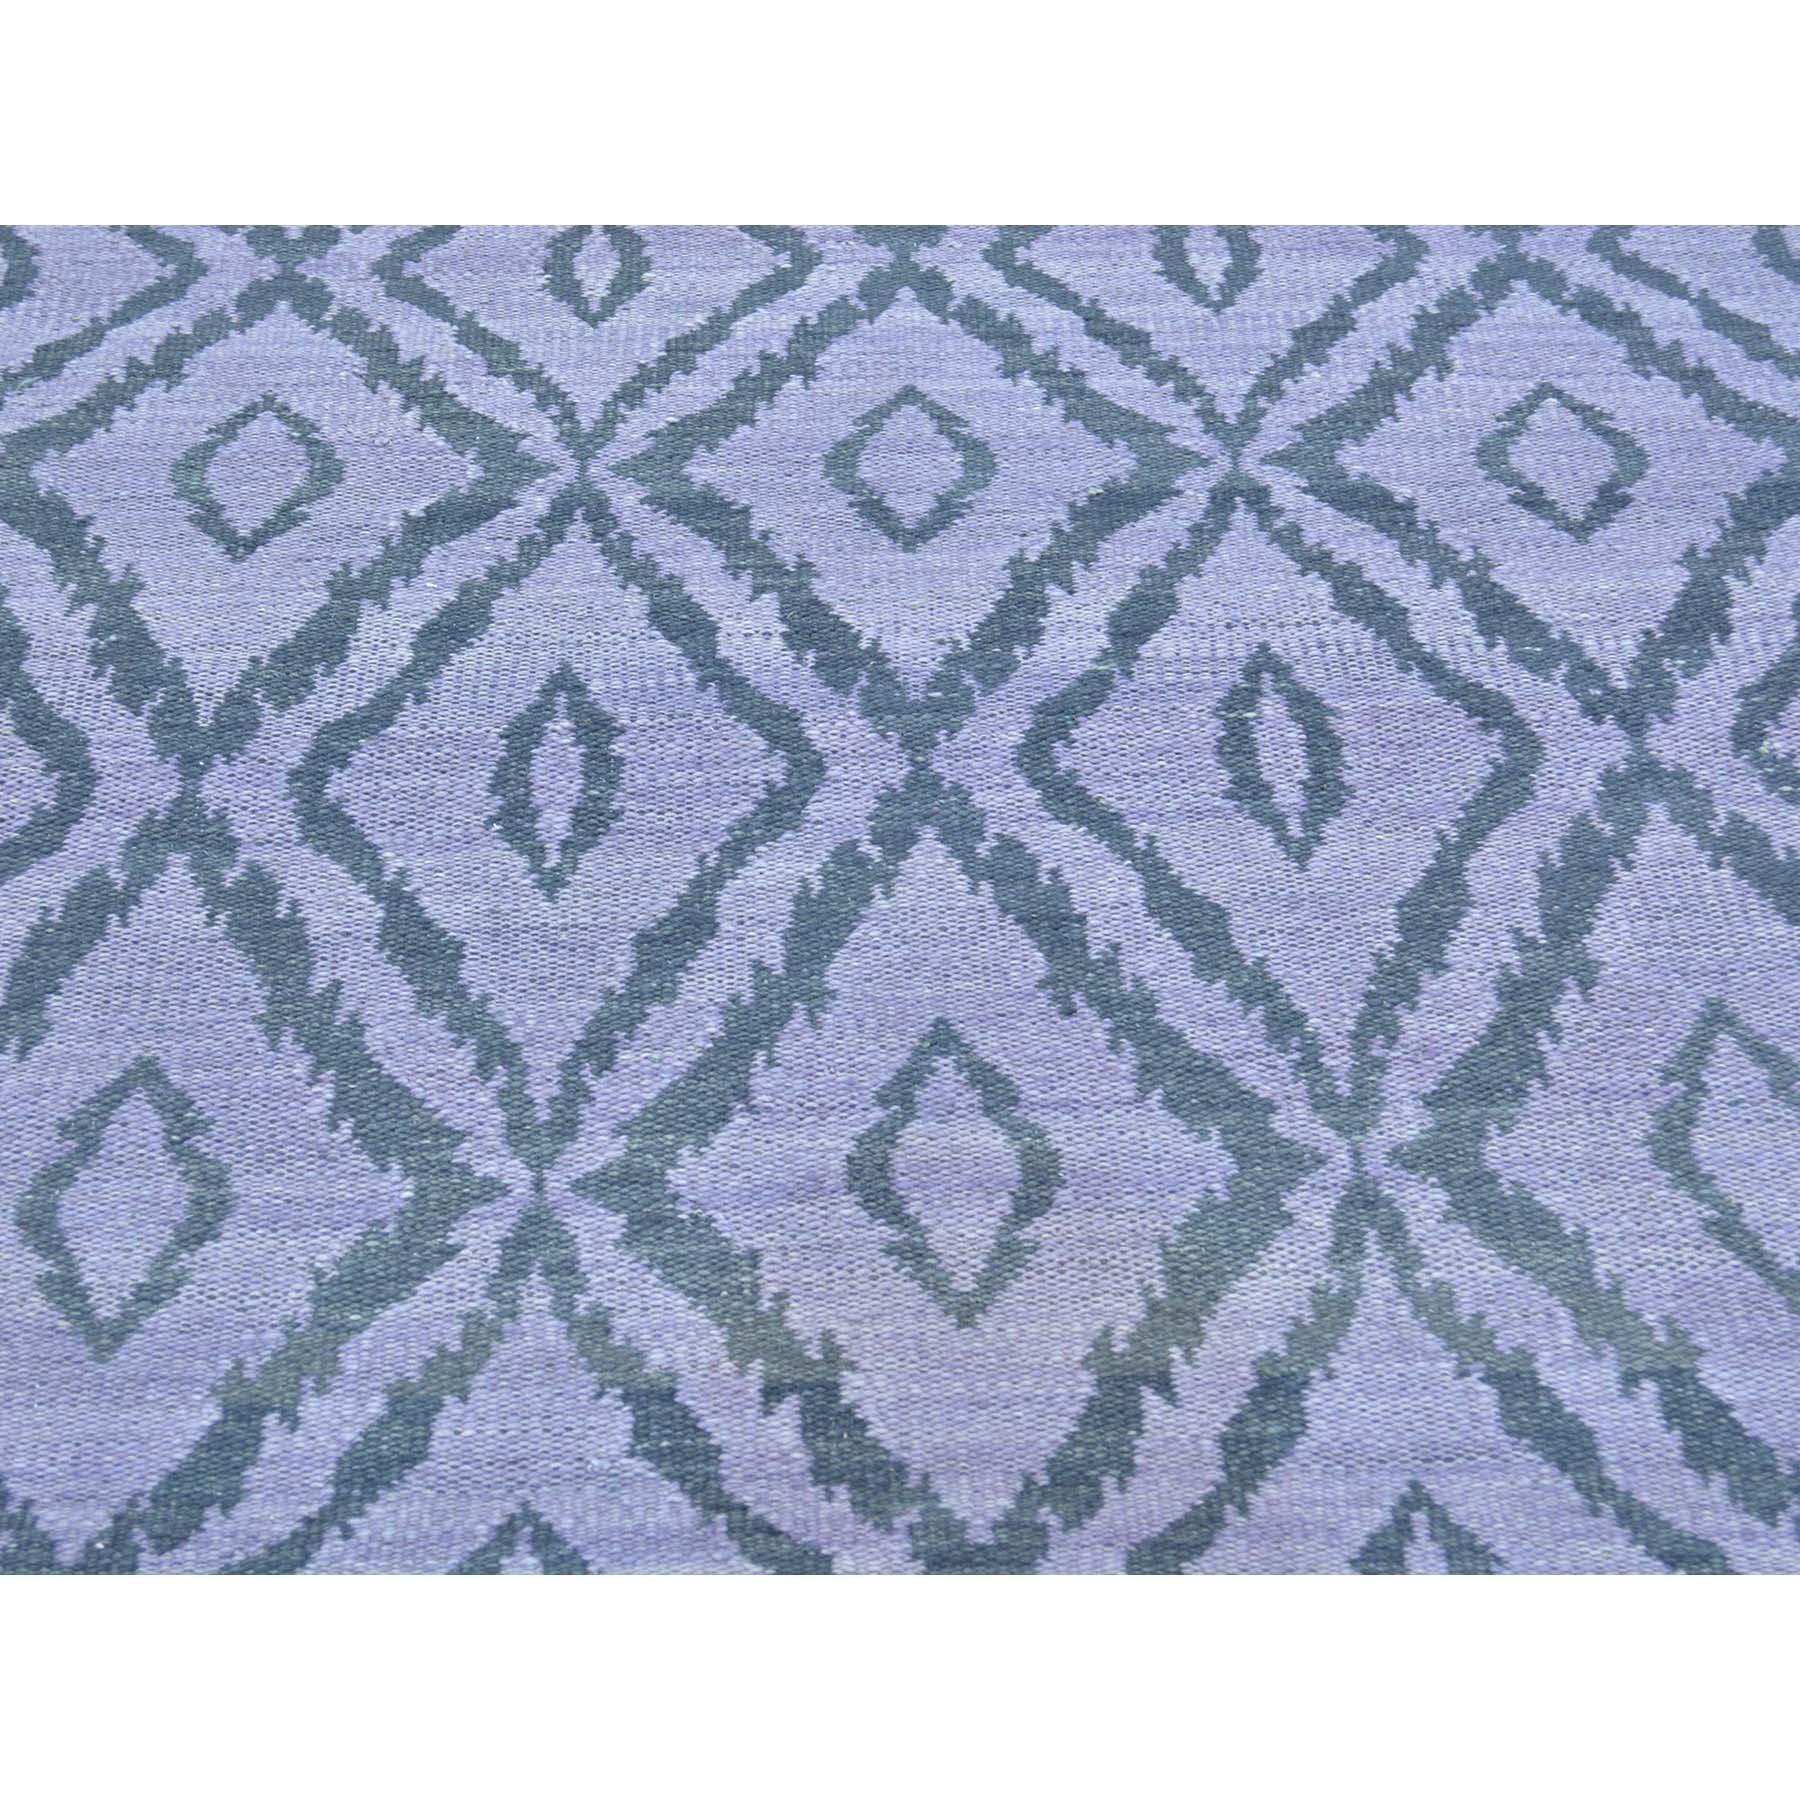 Hand Woven Flat Weave Area Rug > Design# CCSR29798 > Size: 5'-2" x 7'-5"